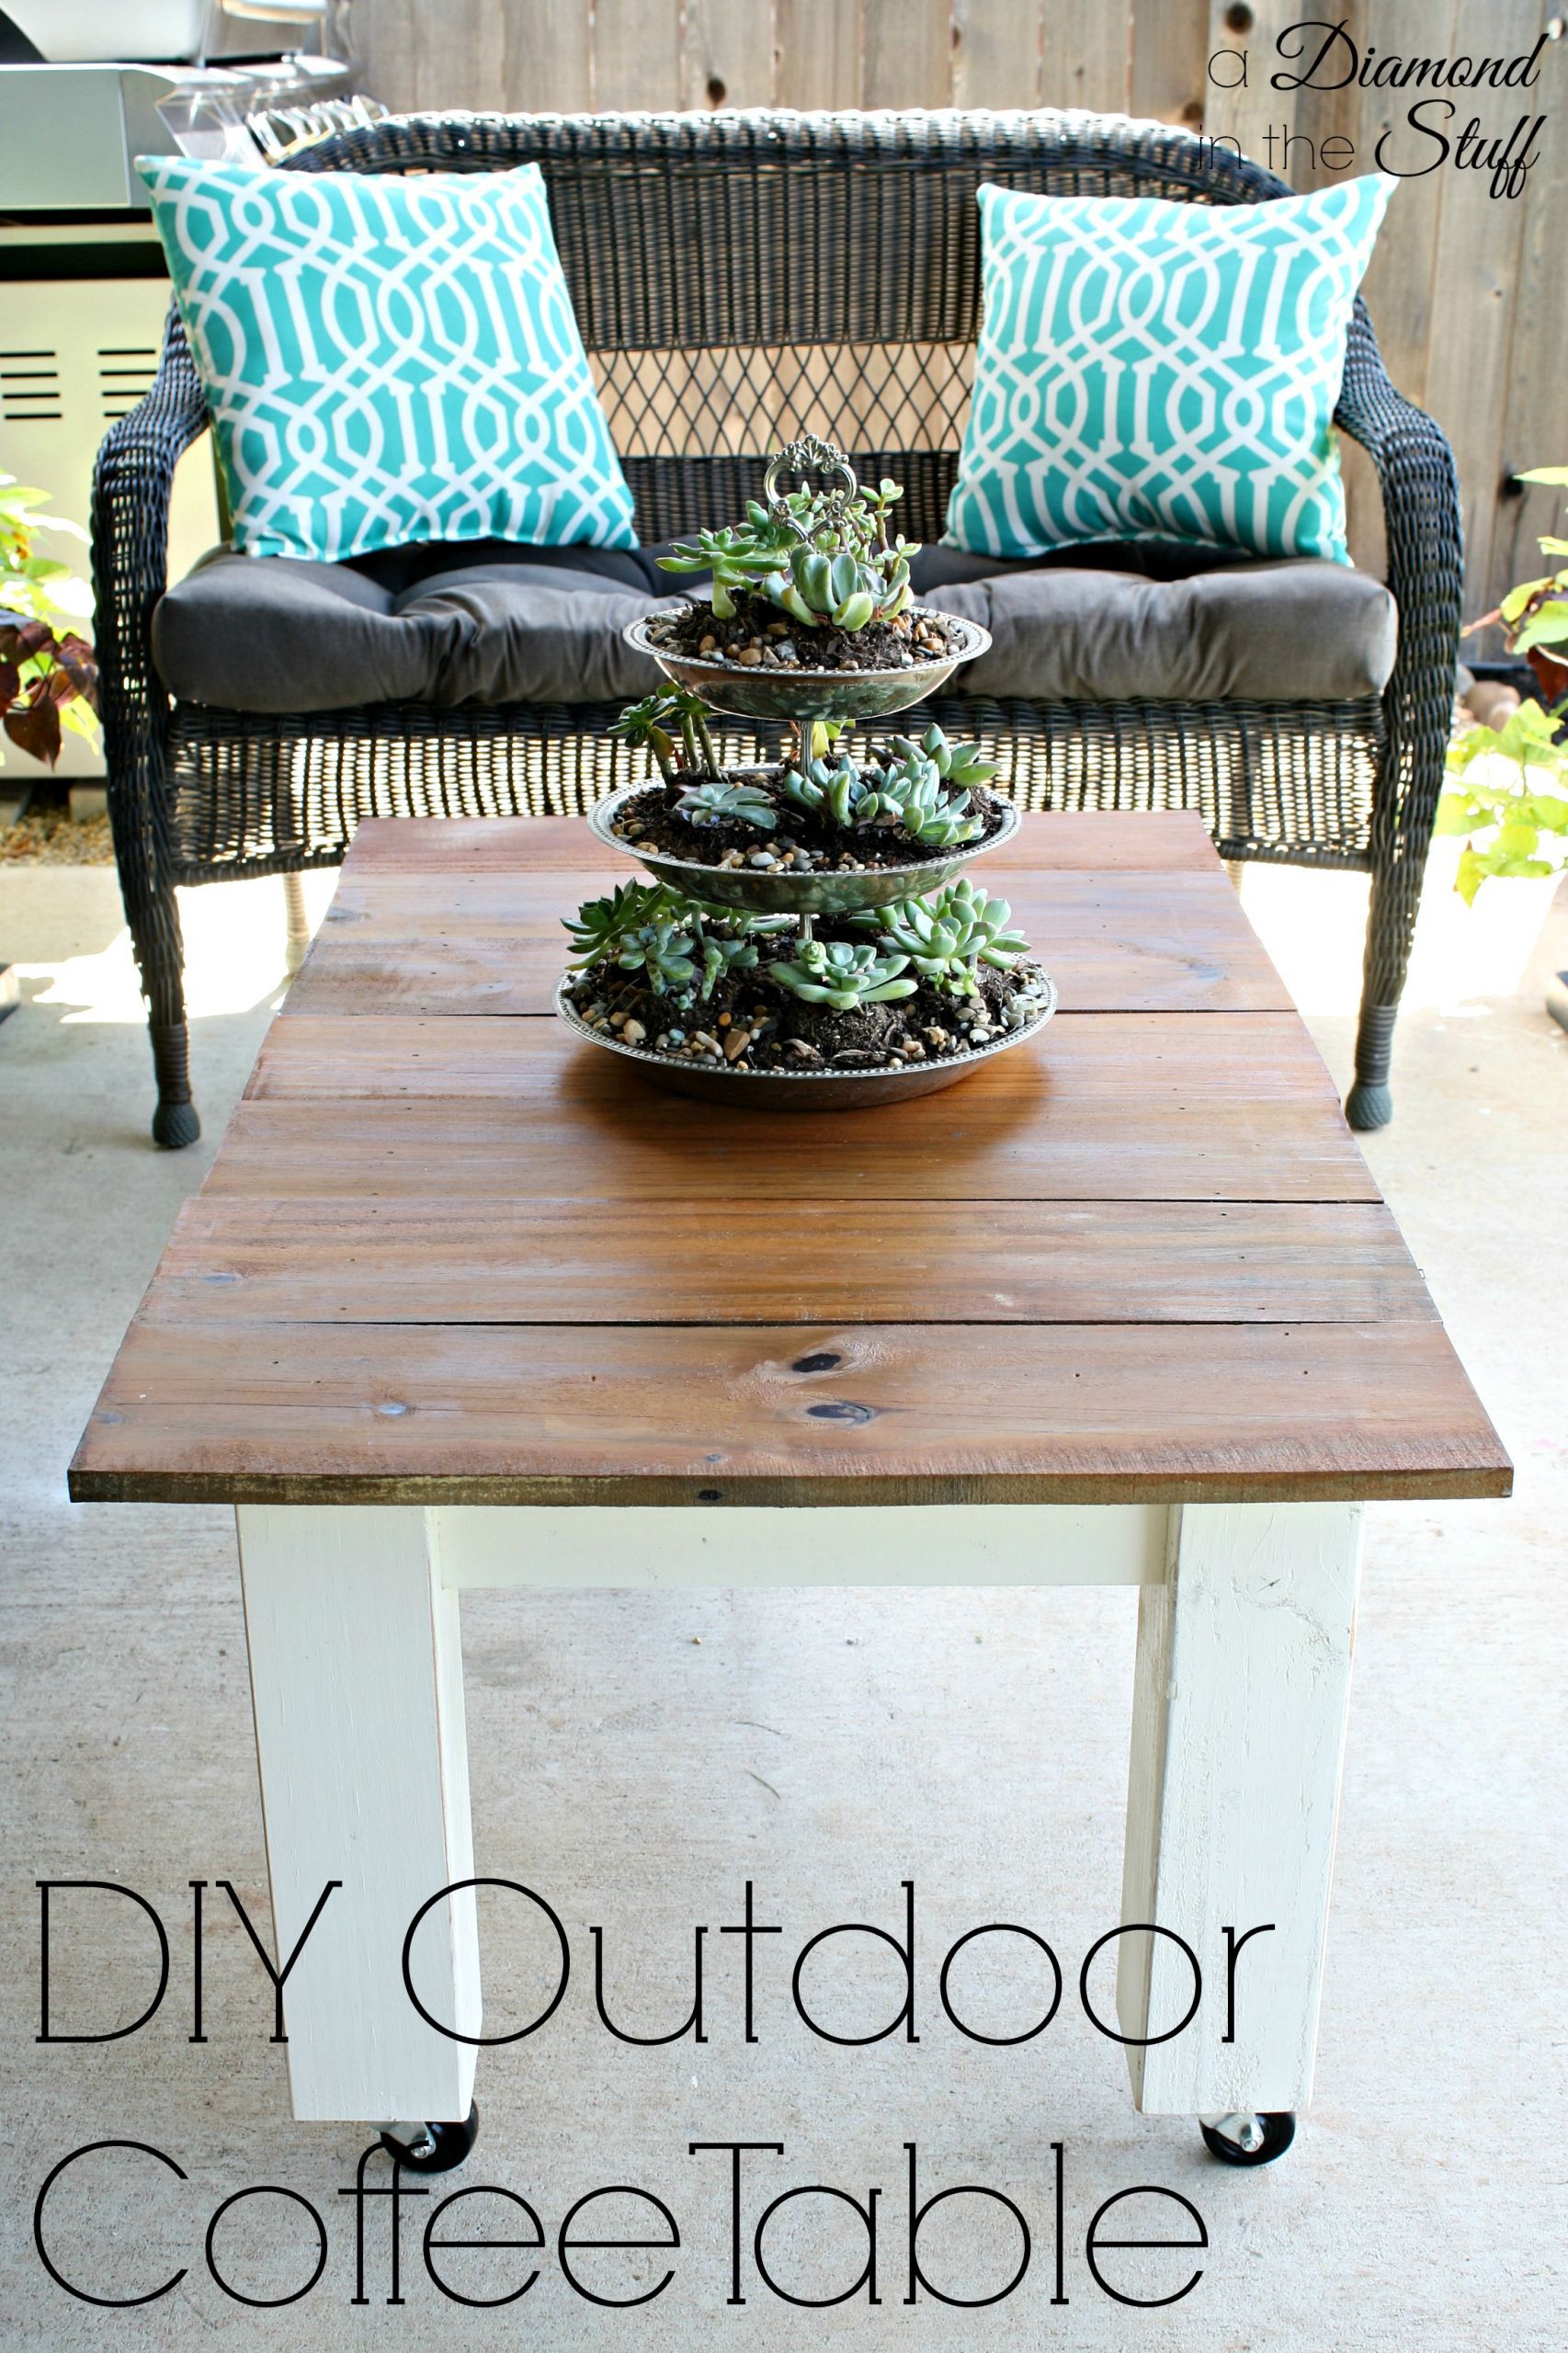 Backyard Table Ideas
 DIY Outdoor Coffee Table – A Diamond in the Stuff